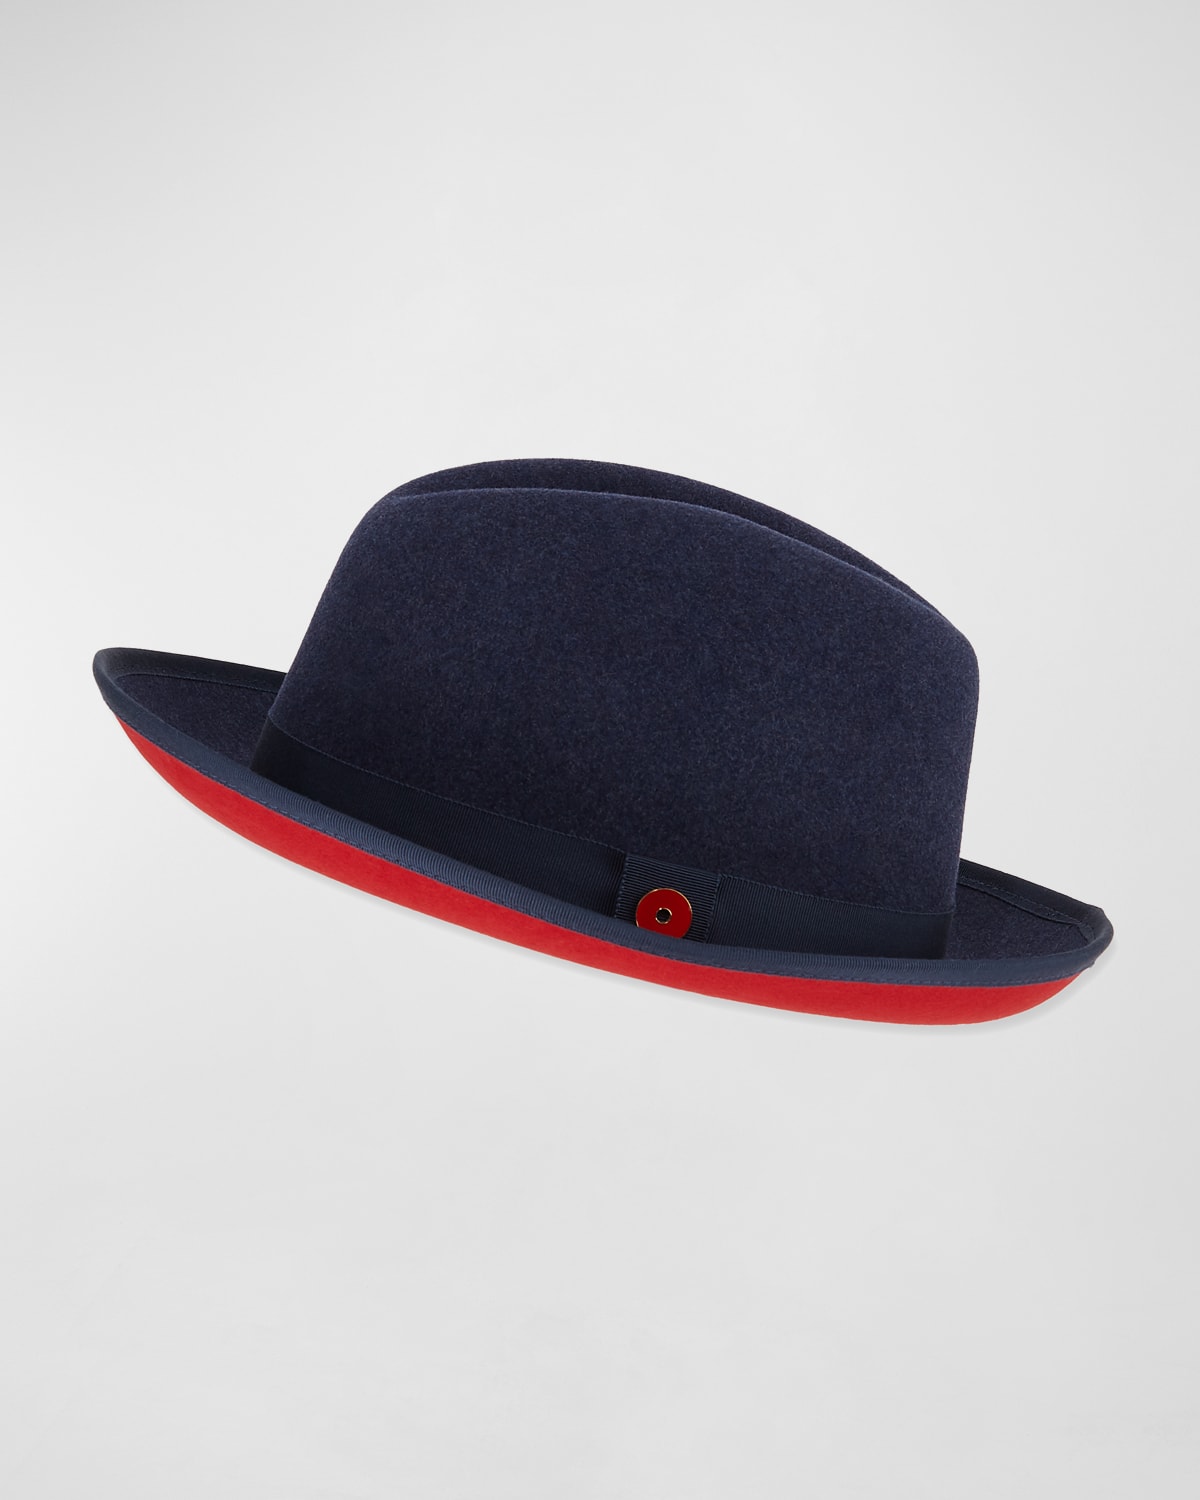 Keith James King Red-Brim Wool Fedora Hat, Blue